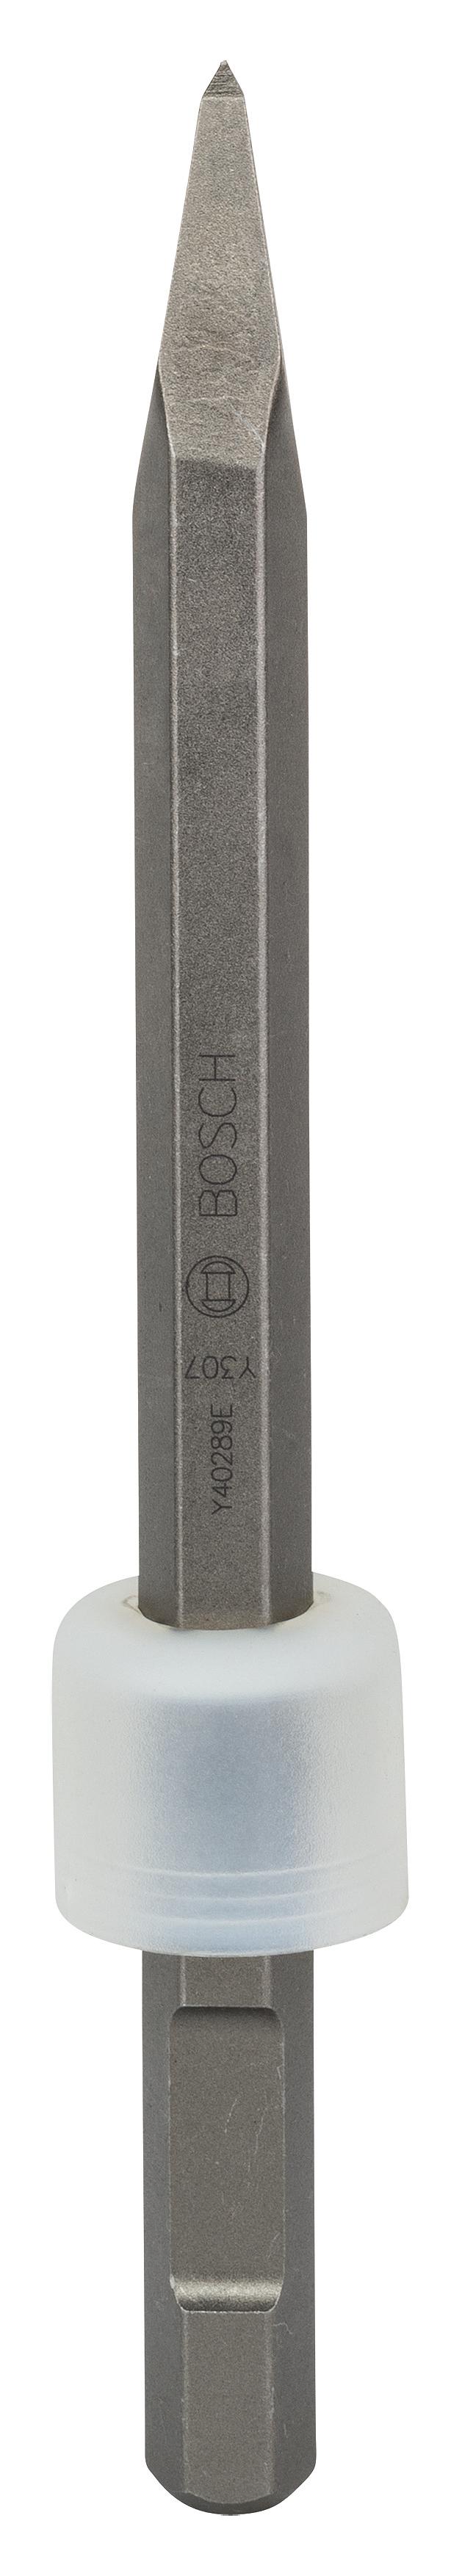 Bosch Špic dleto šestostrani prihvat sa 19 mm-prihvatom 1618630000, 300 mm